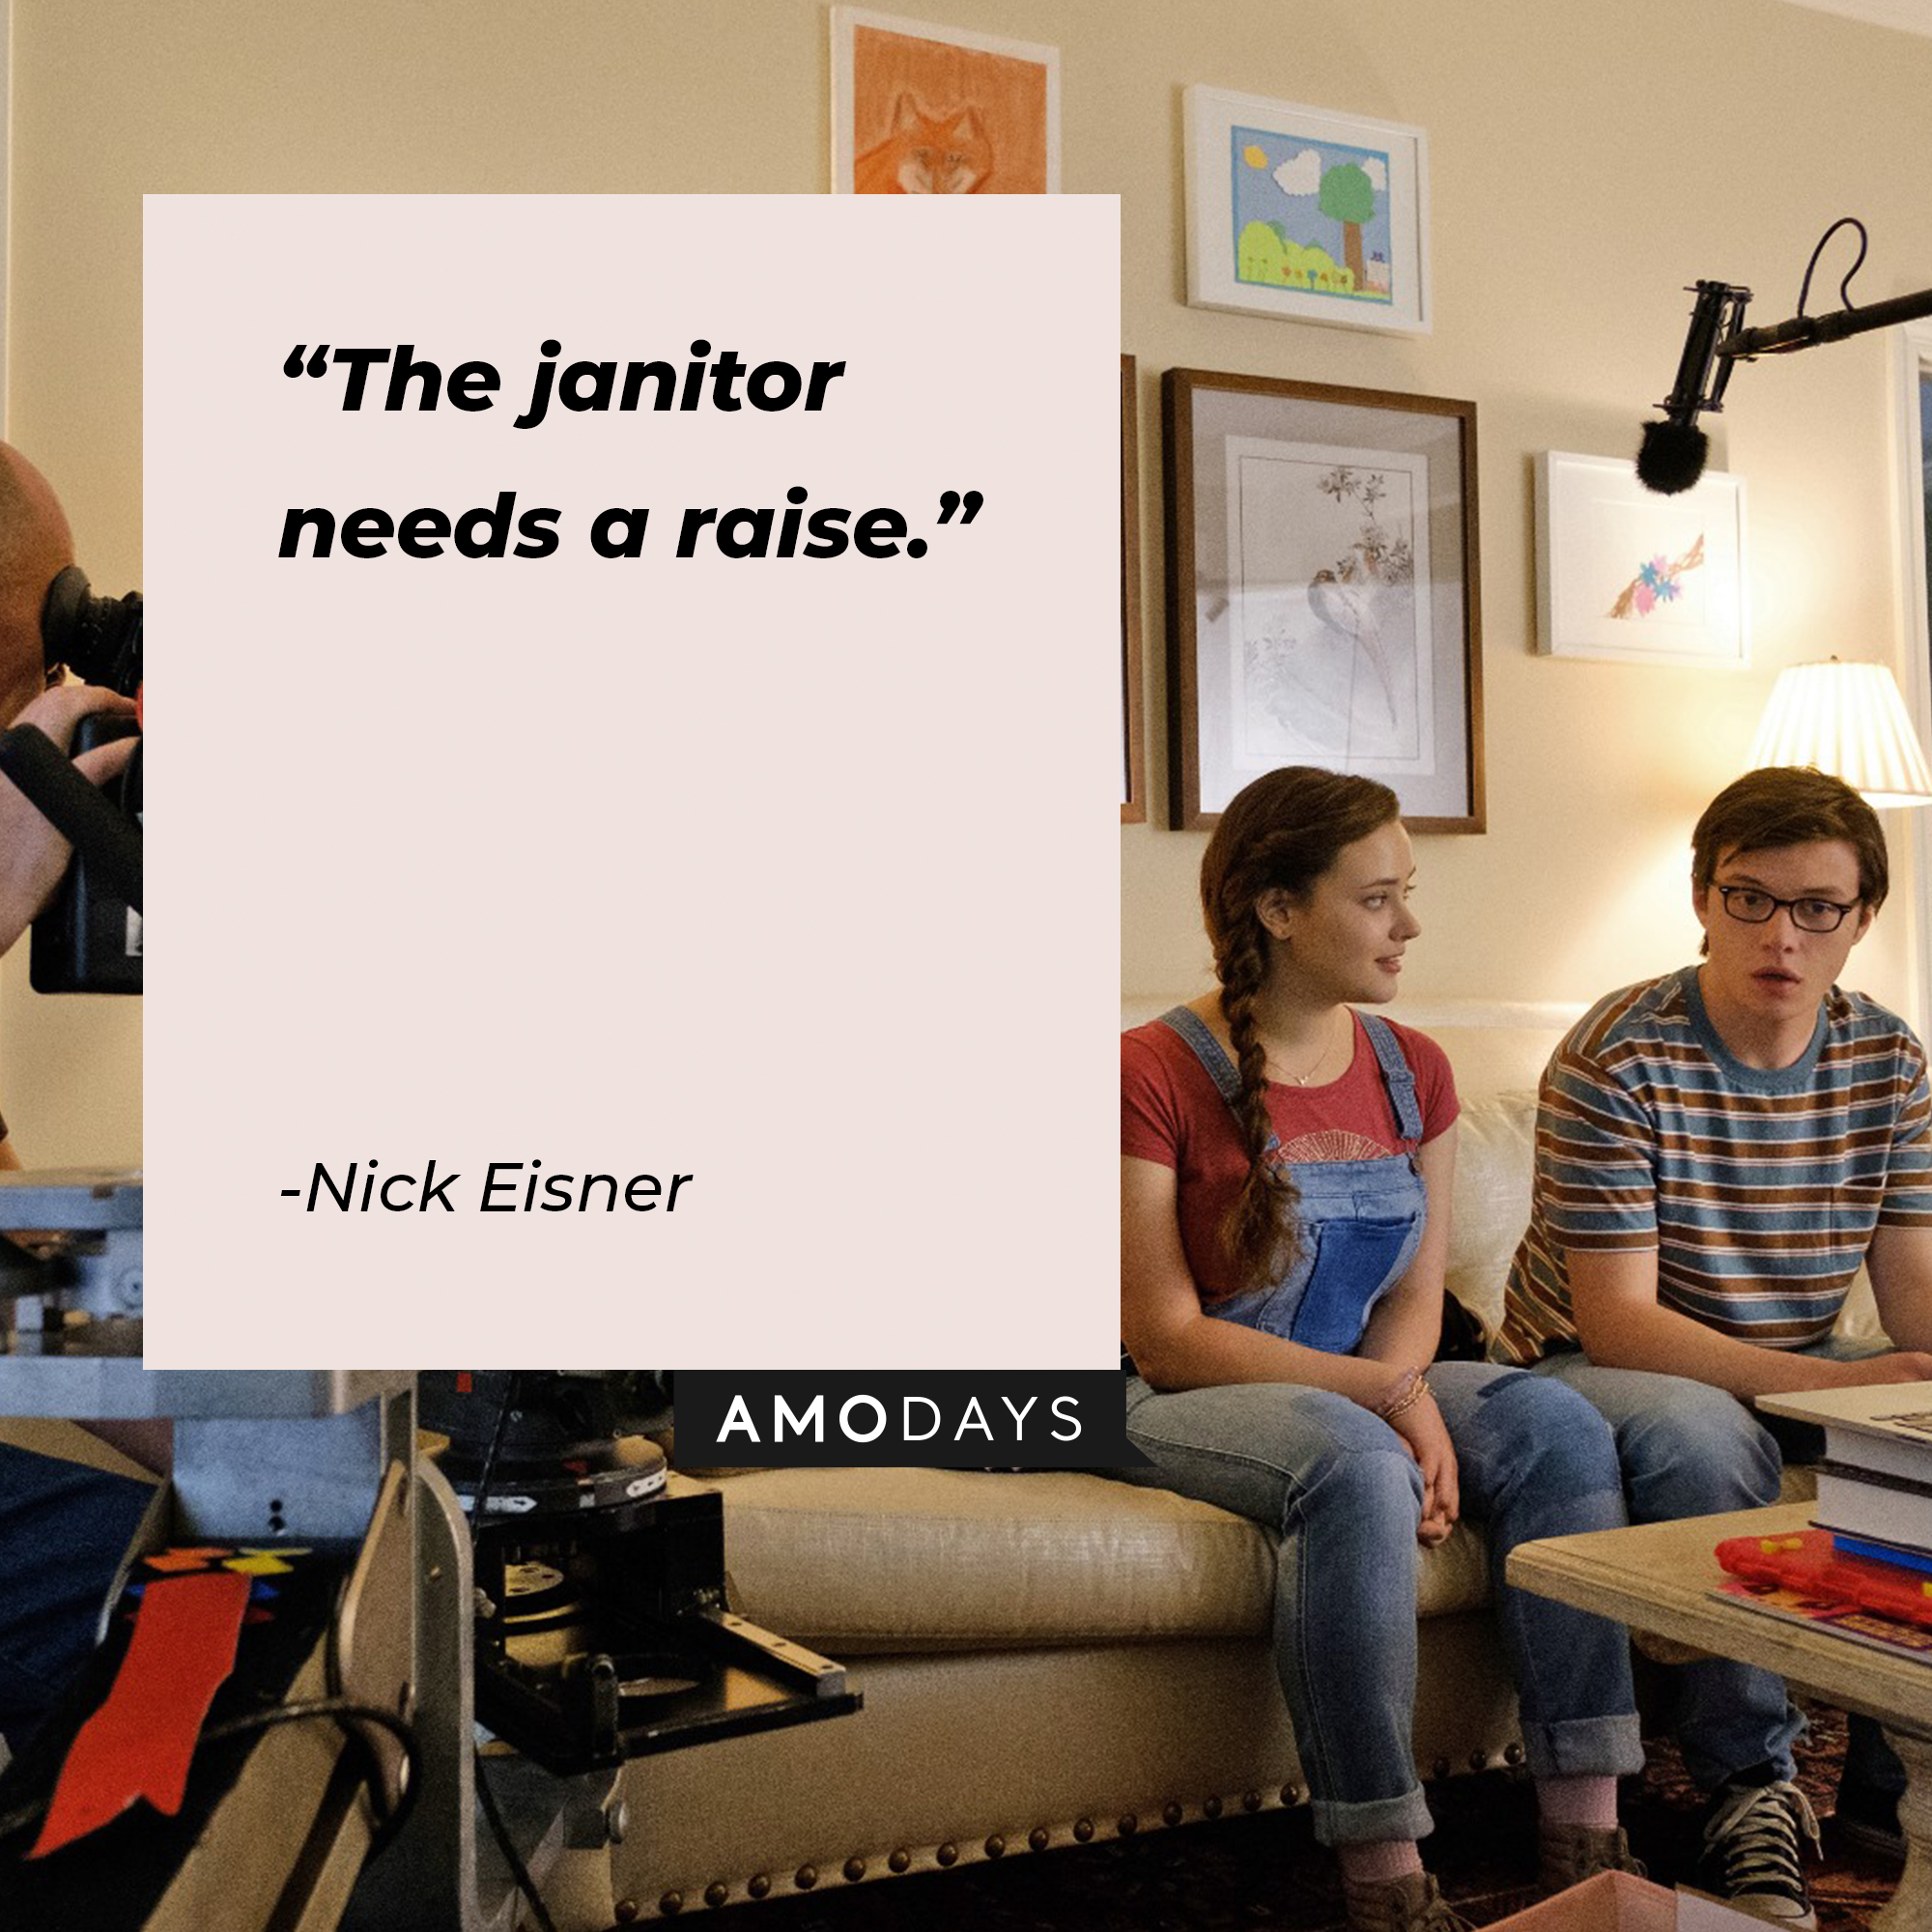 Nick Eisner's quote, "The janitor needs a raise." | Source: facebook.com/LoveSimonMovie